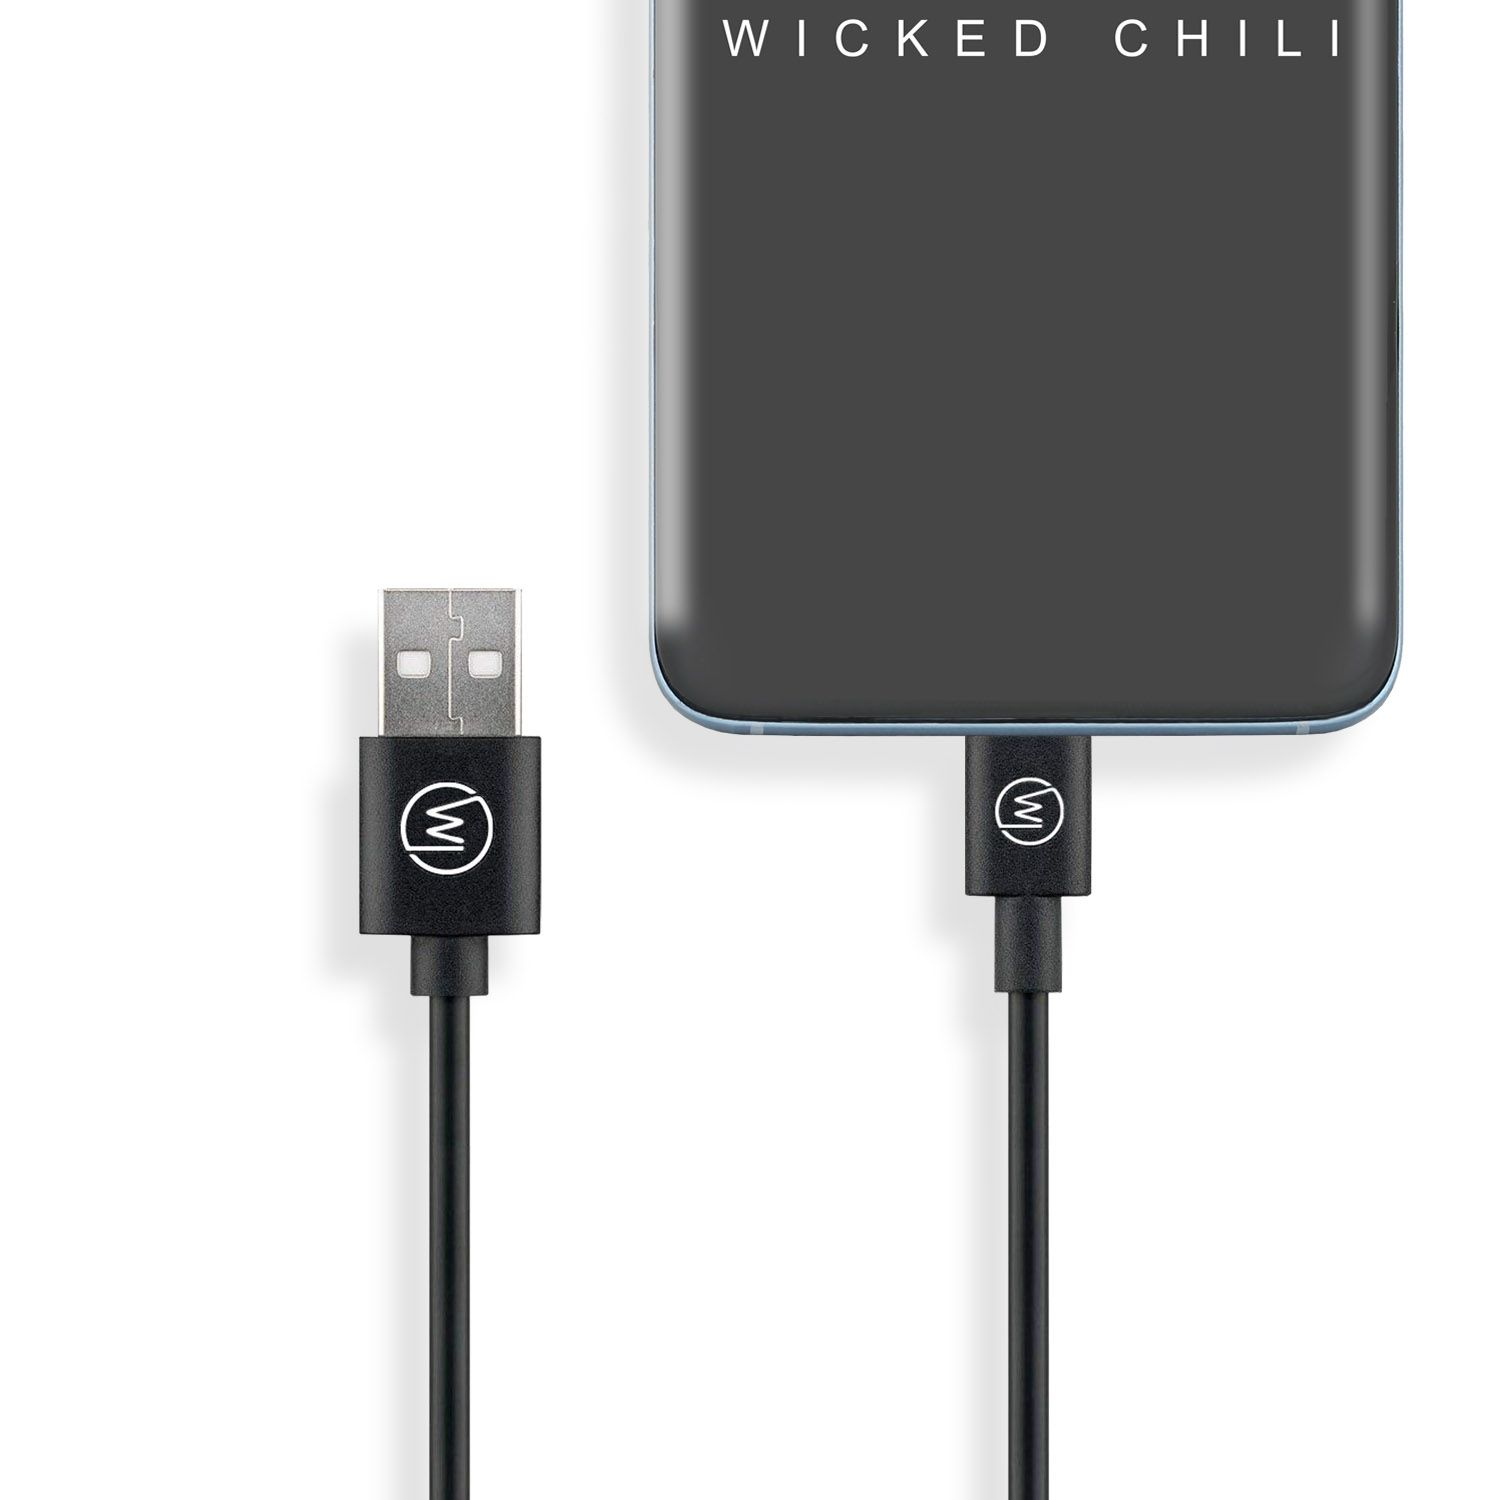 WICKED CHILI Wicked Chili 1x Ladekabel und Fast m, Ladekabel, Charge Kabel 1 USB-A 3A Schnell-Ladekabel, Datenkabel Schwarz auf USB-C